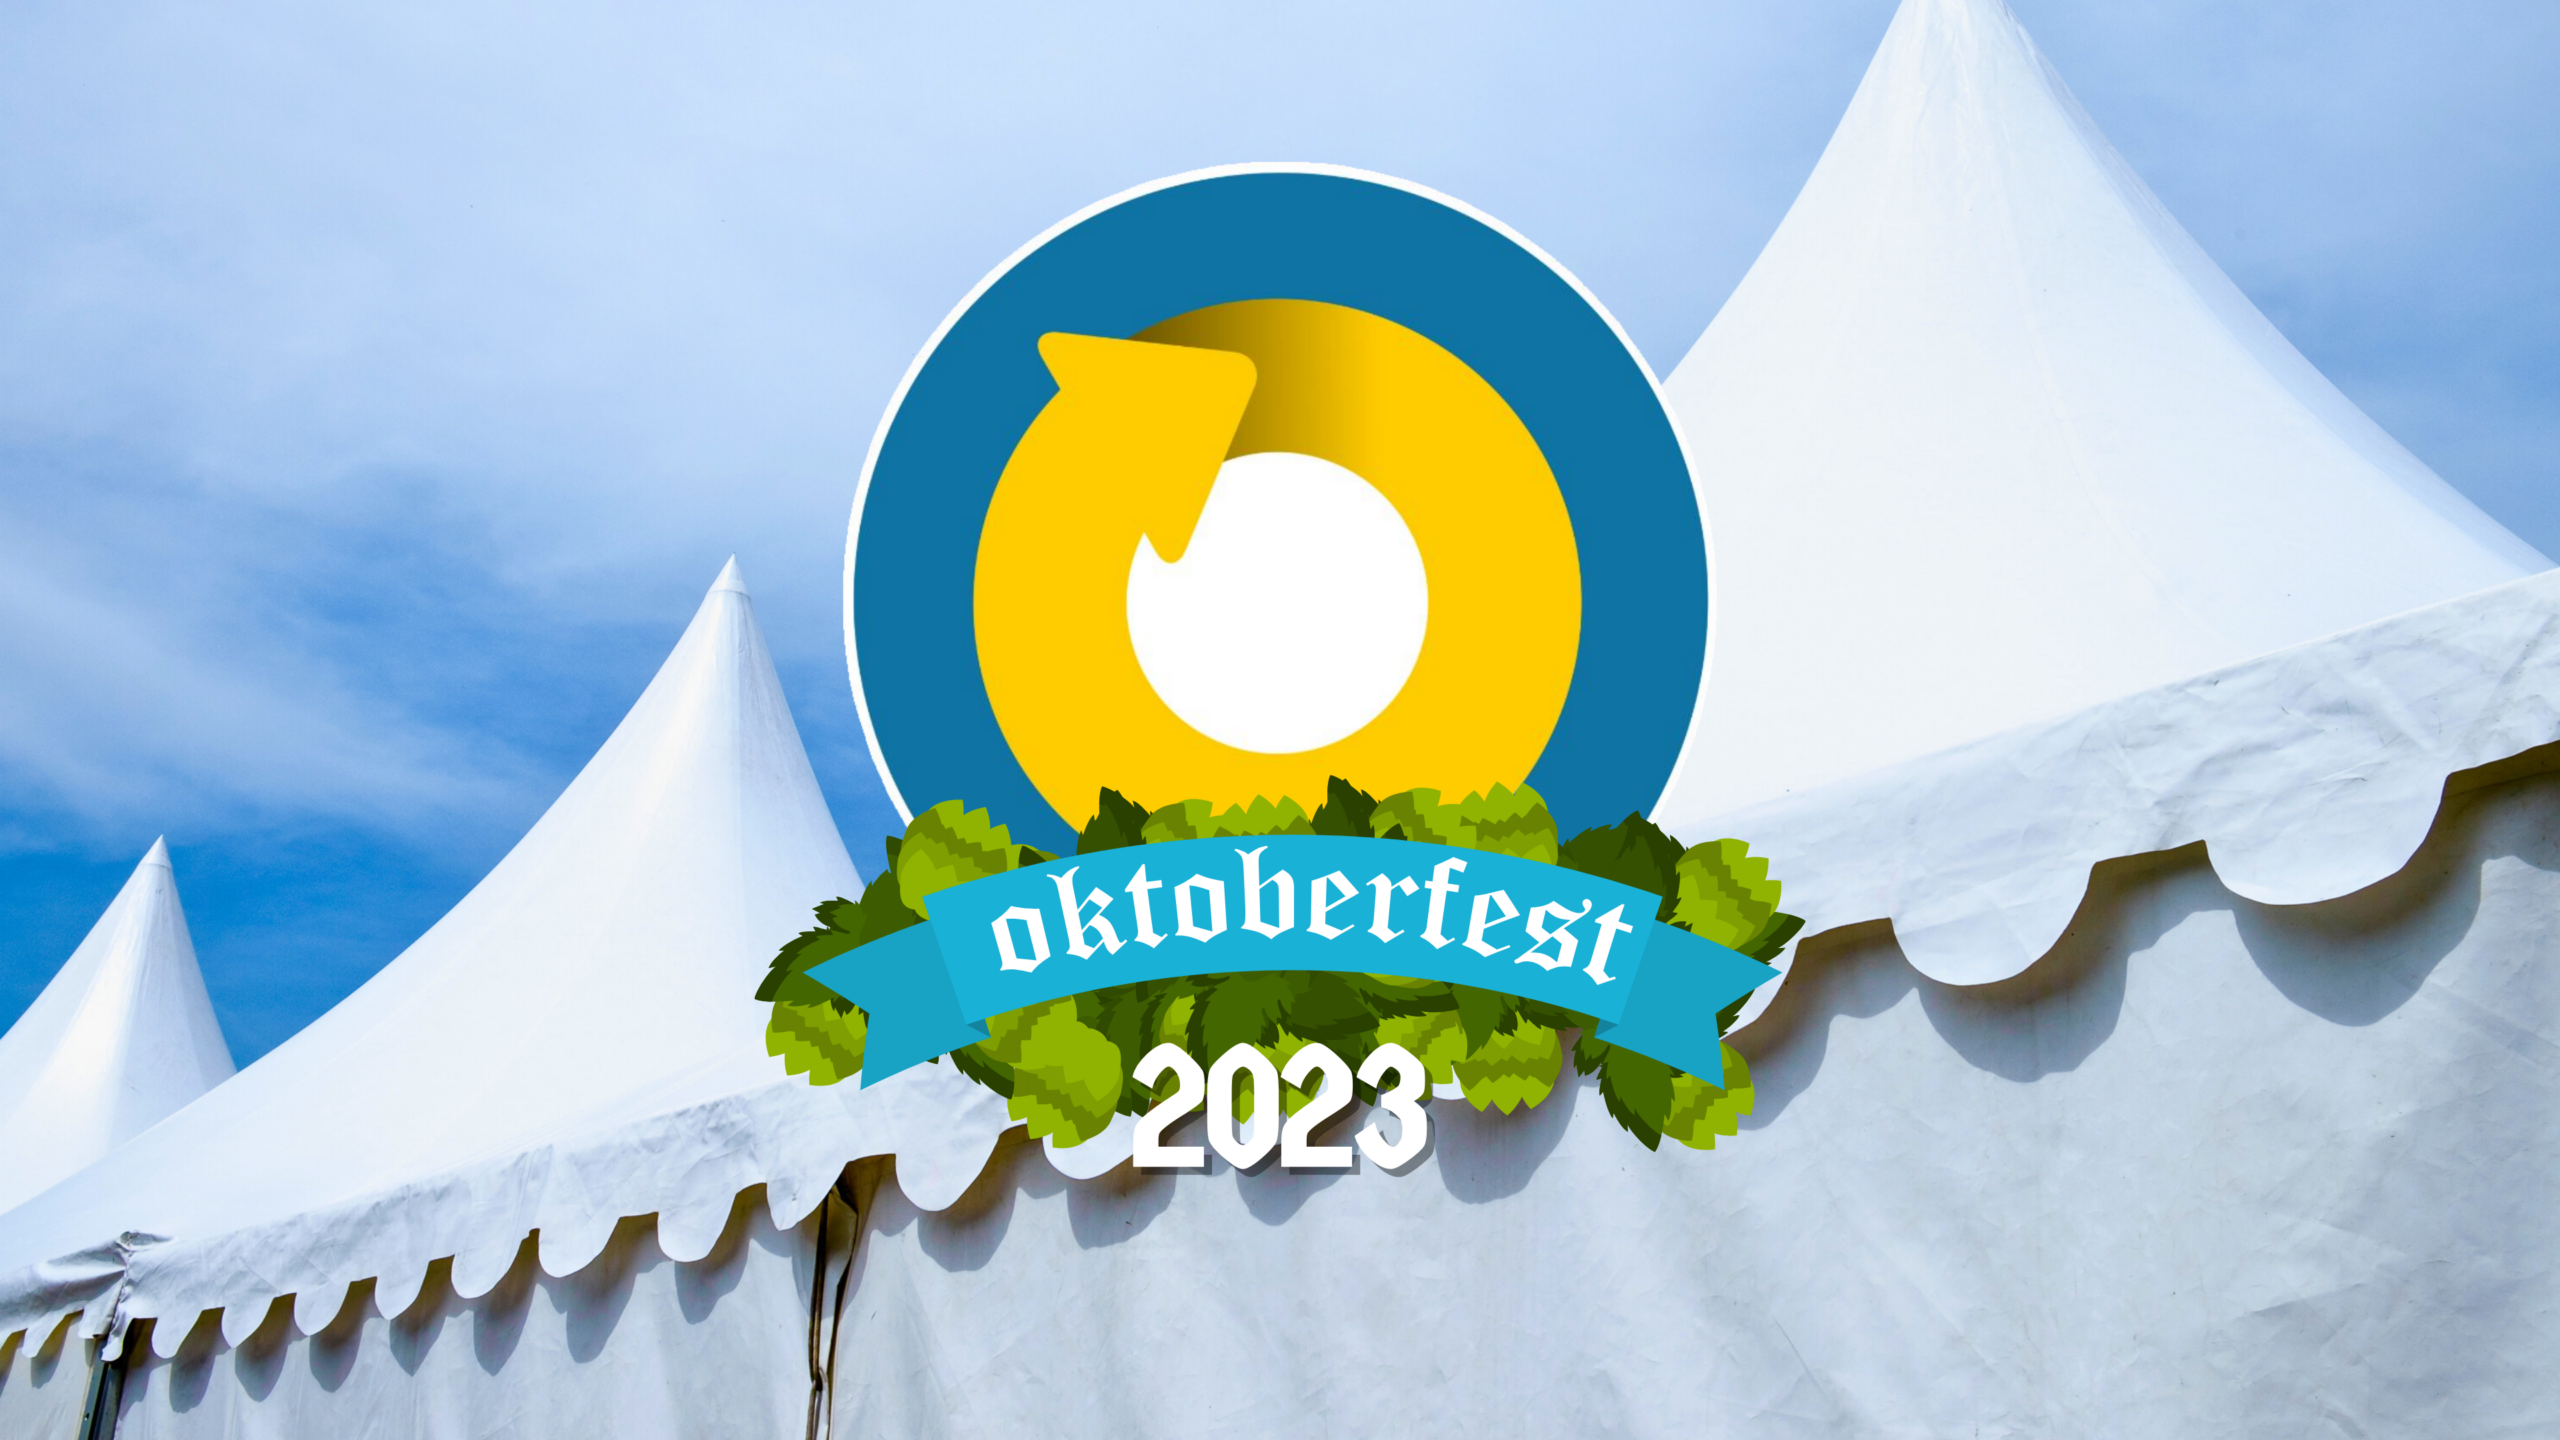 Oktoberfest 2023 Release Banner